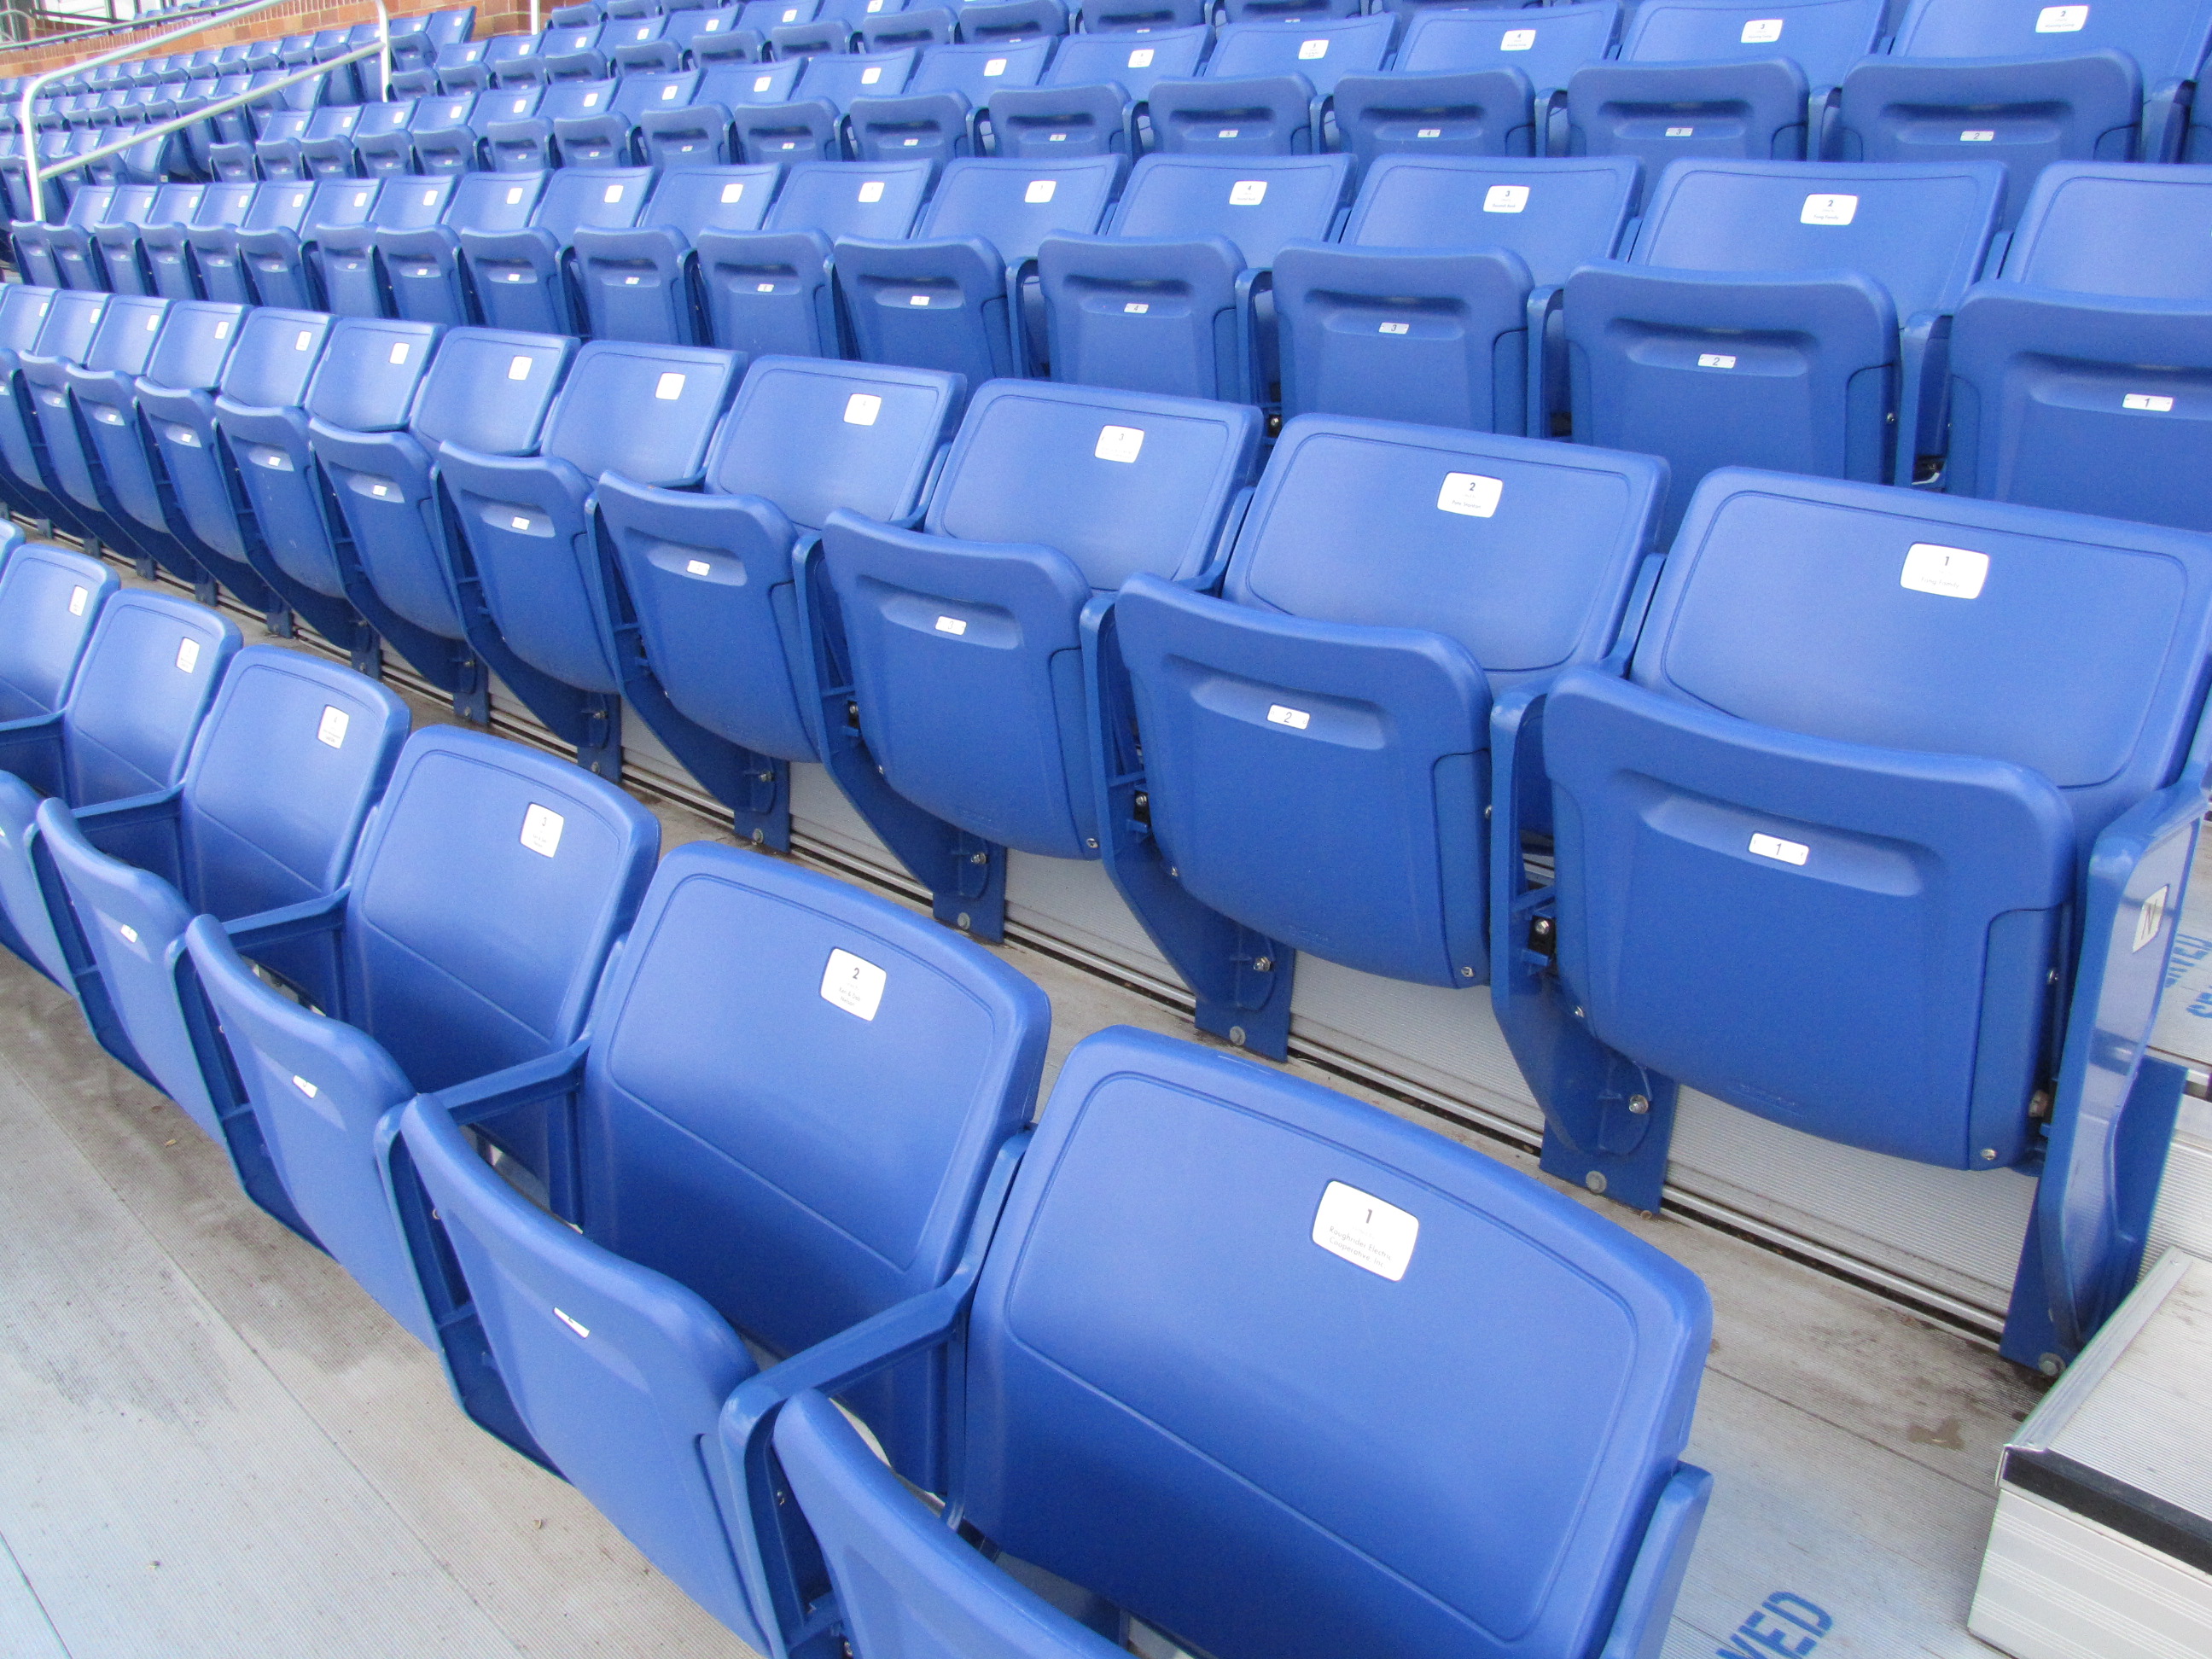 Stock photo of empty seats at an outdoor stadium.